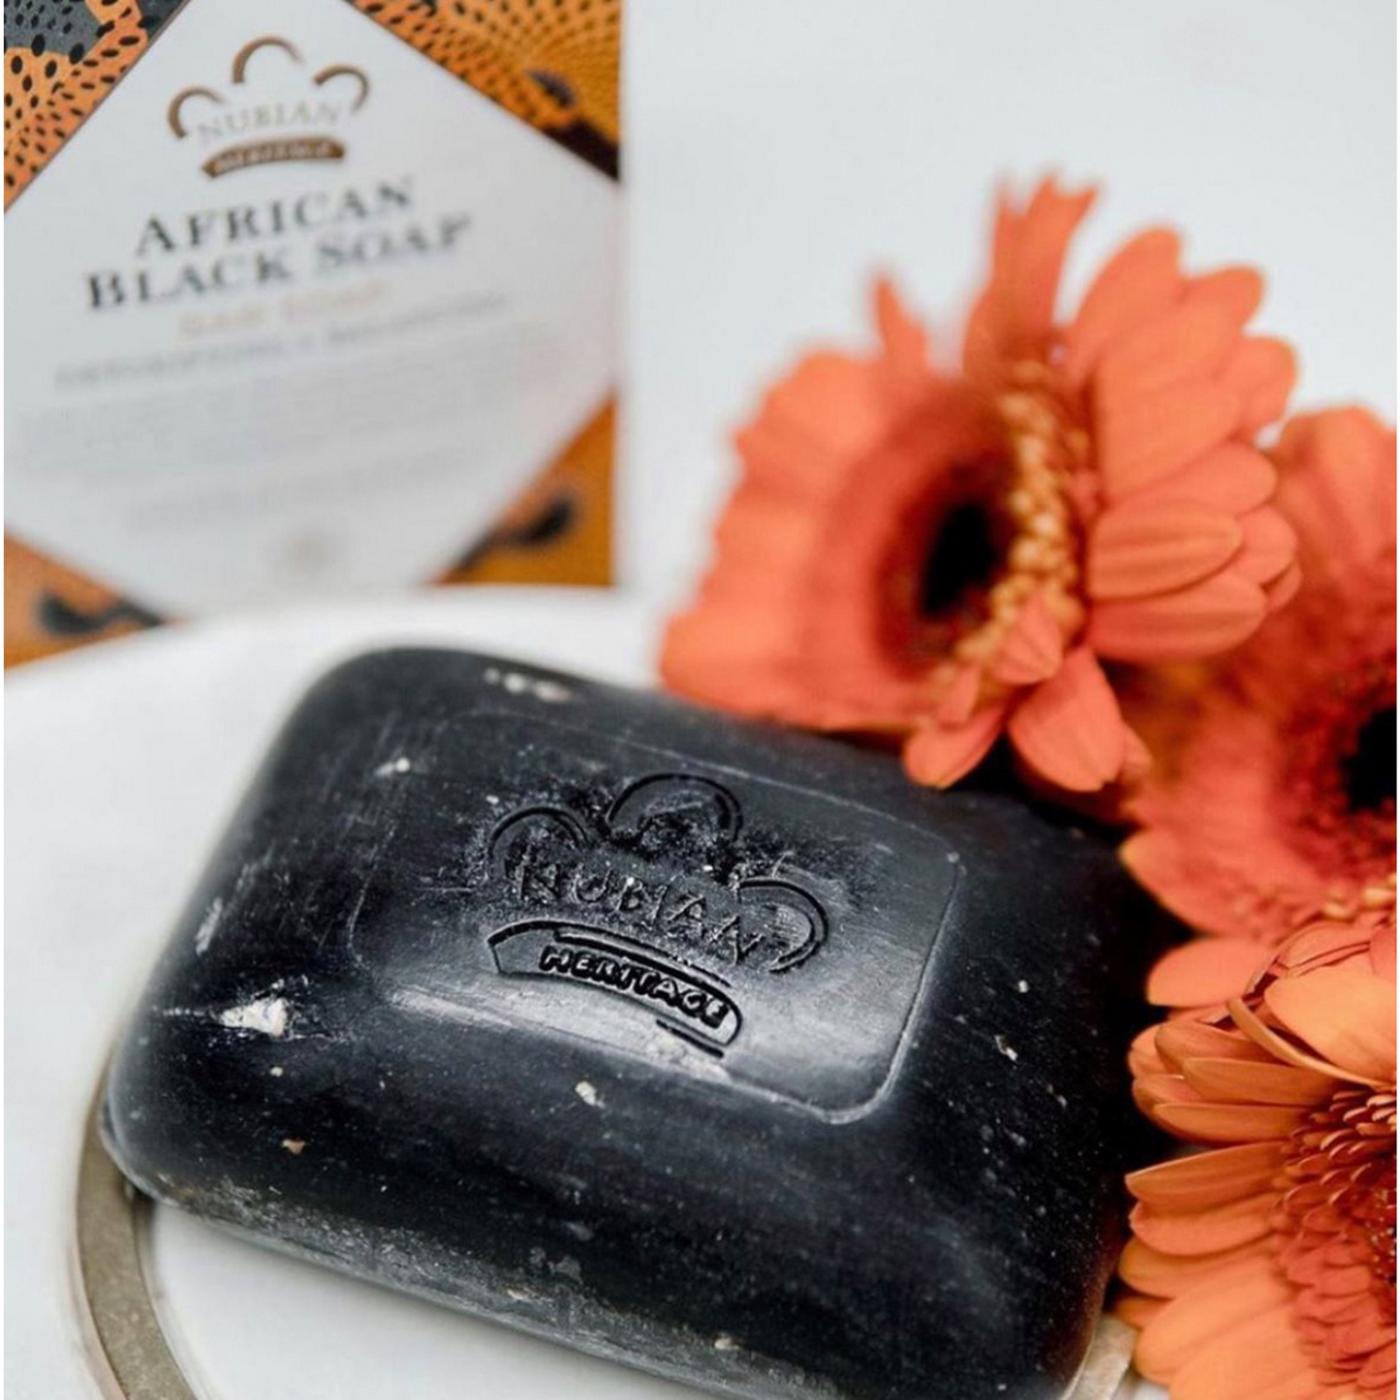 Nubian Heritage African Black Soap Detoxifying Bar Soap; image 6 of 6